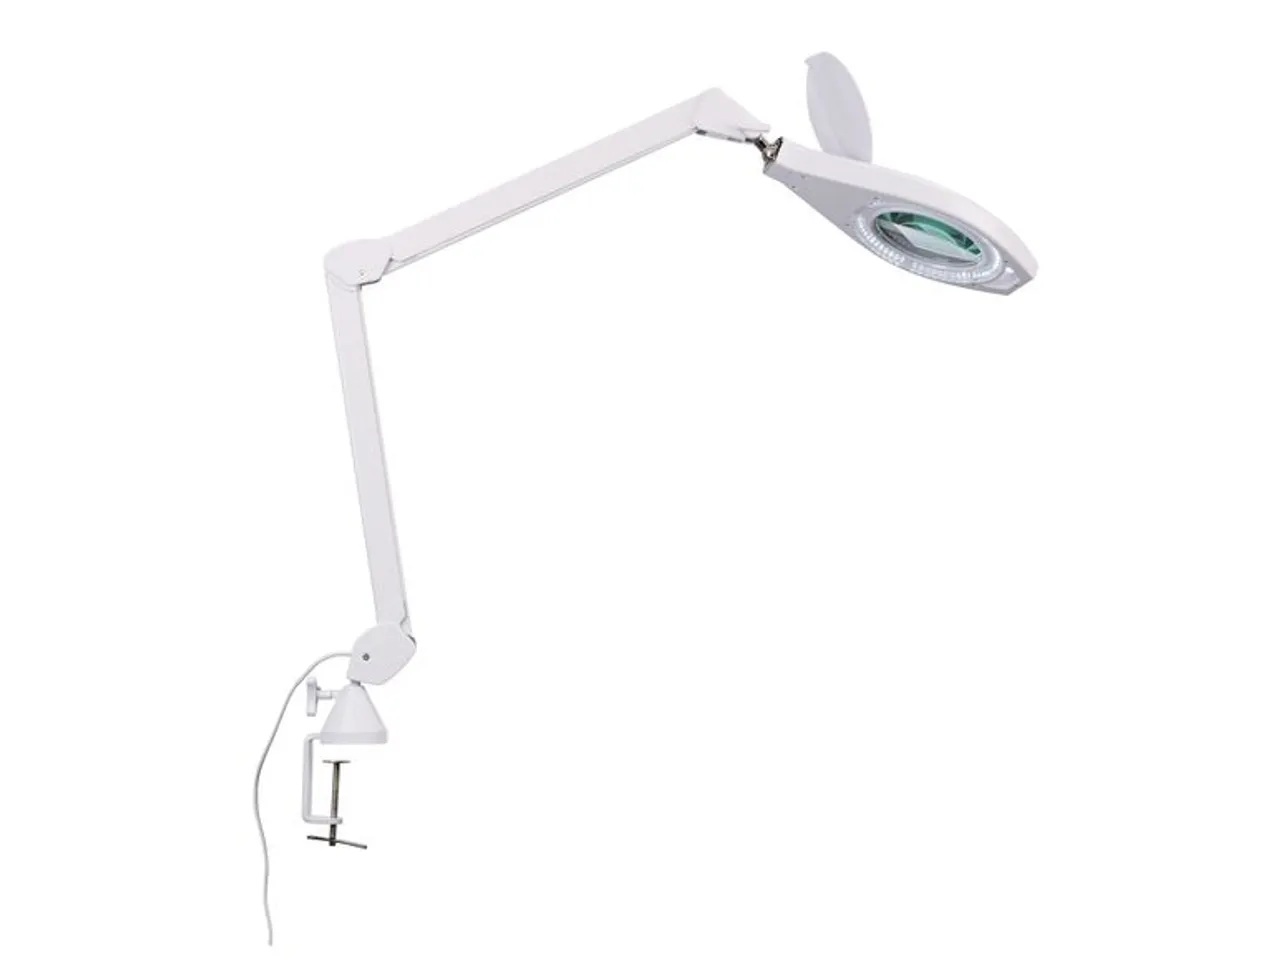 Competitive Melting discount Držák pro LED lampa s lupou LIVARNO - Lidl by fotonoska | Download free STL  model | Printables.com